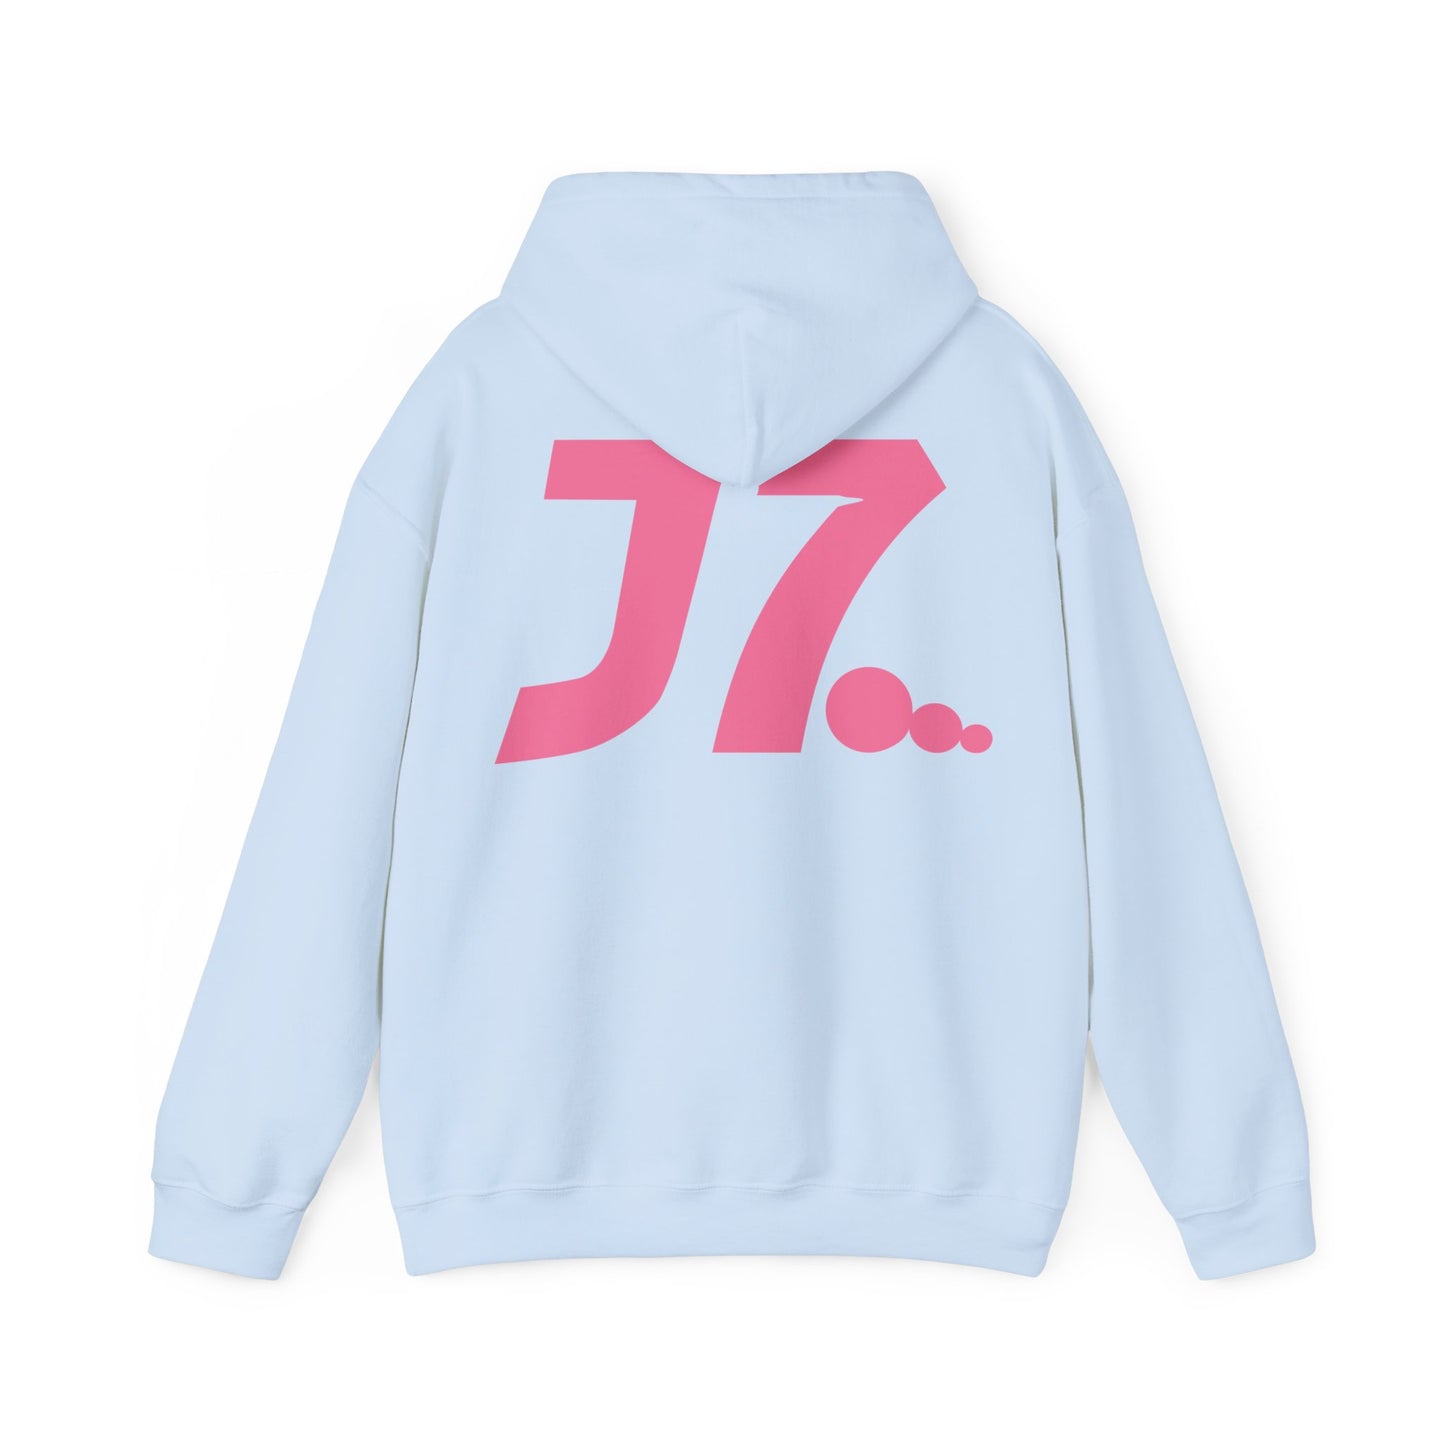 j7 hoodie light blue-pink